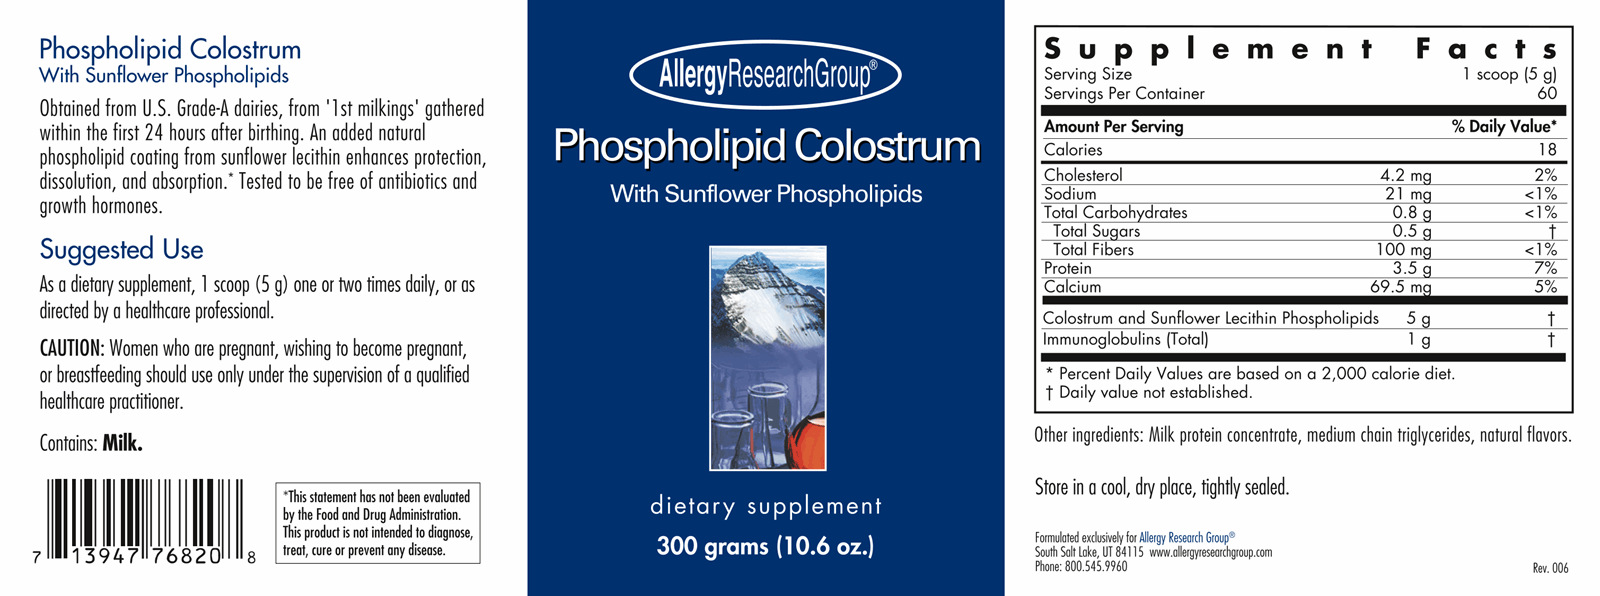 Phospholipid Colostrum 